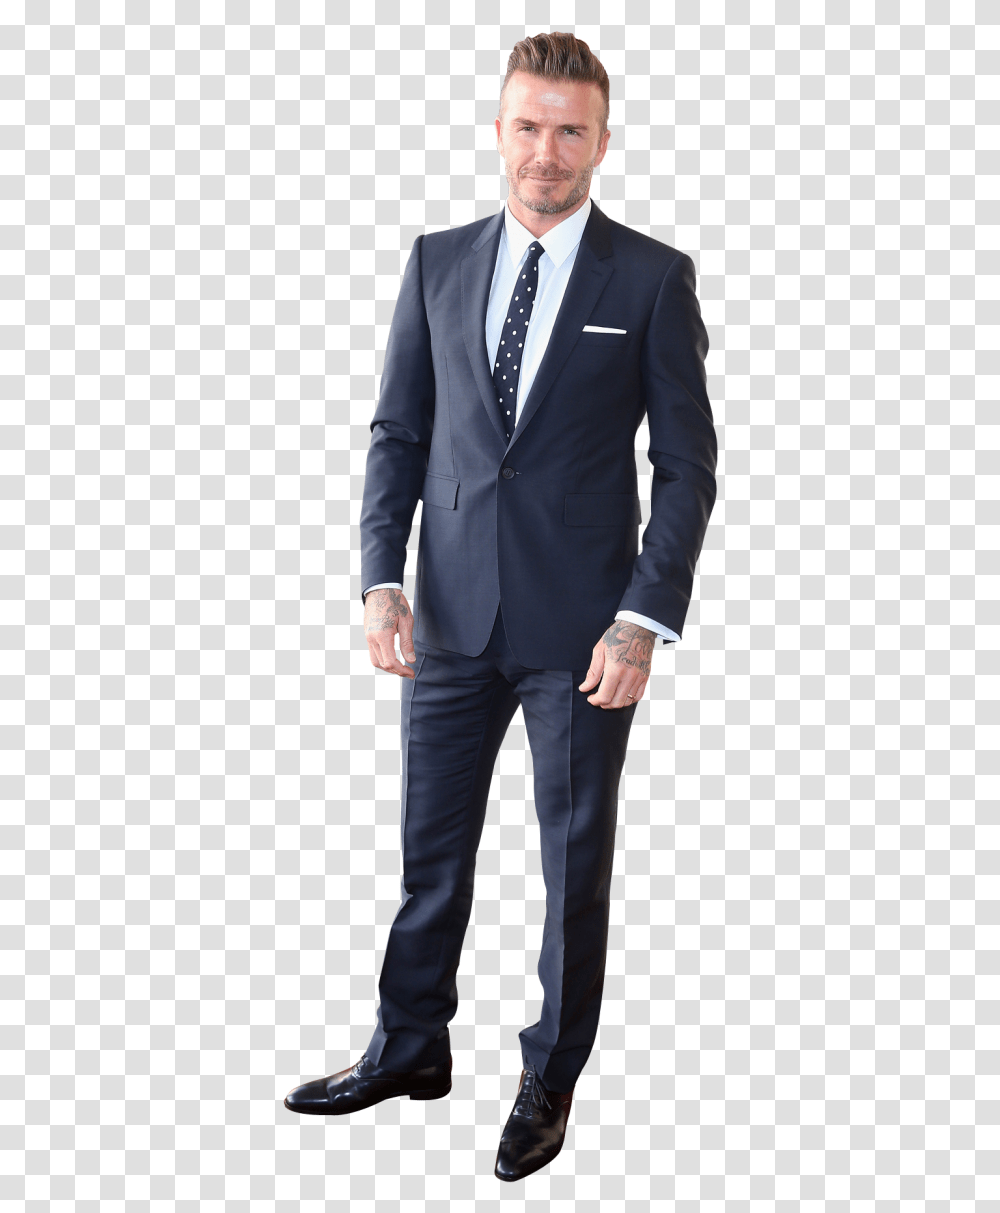 David Beckham Image Corporate Attire For Boys, Suit, Overcoat, Tie Transparent Png